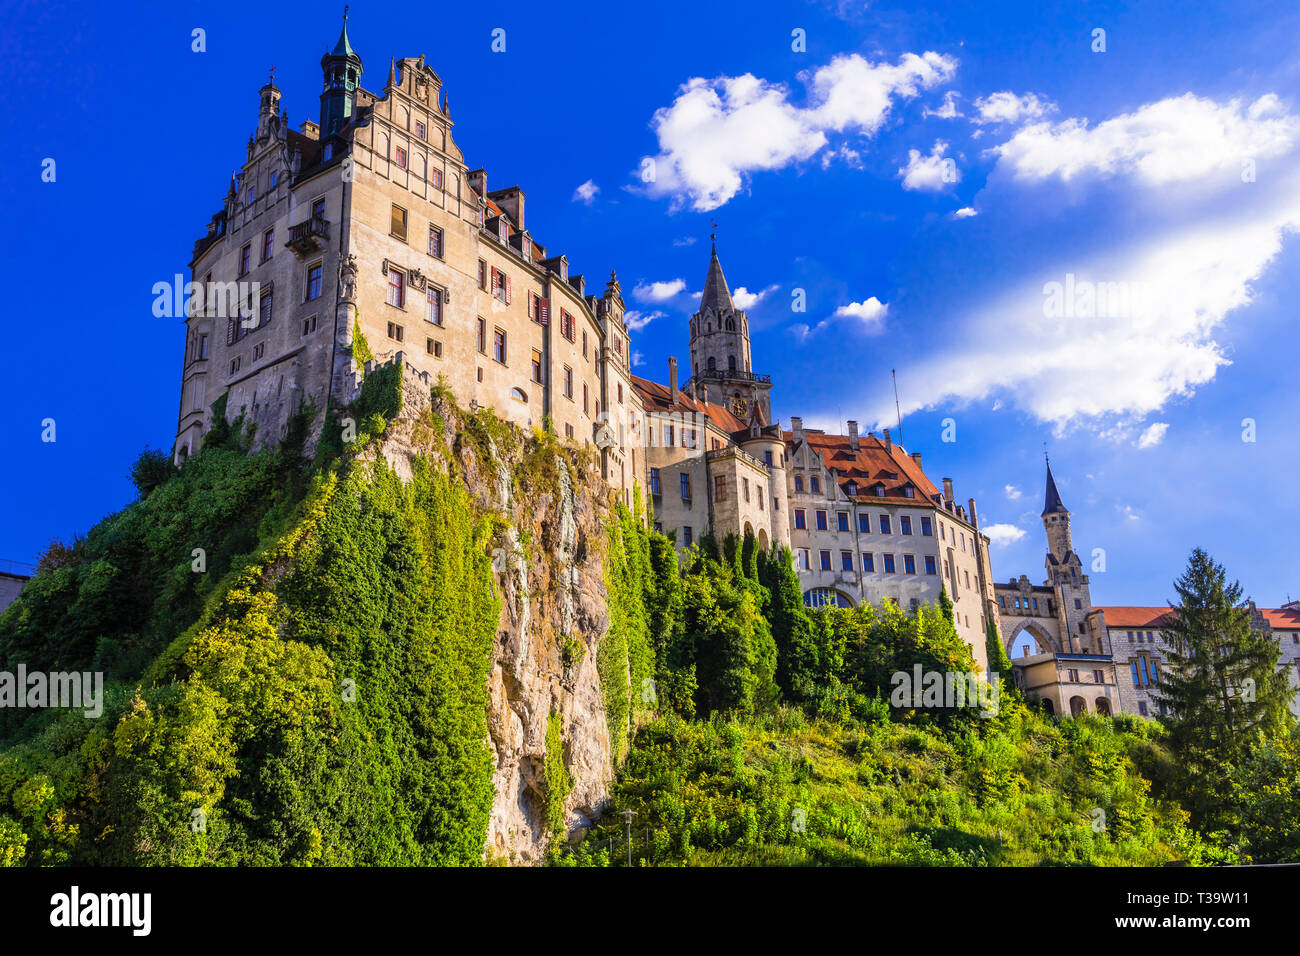 Impressionante Sigmaringen castello medievale,Germania Foto Stock